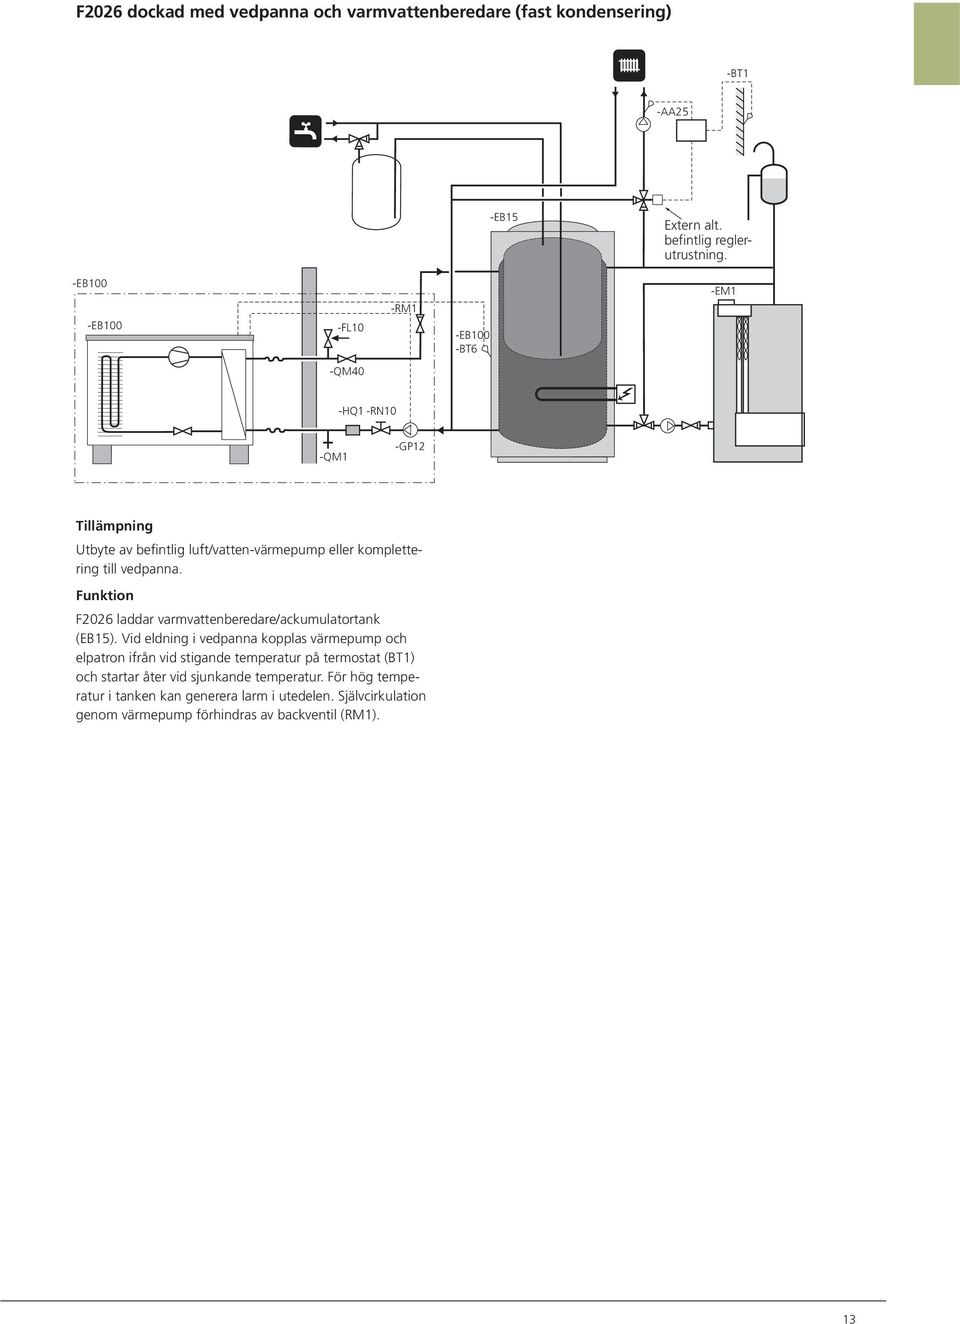 vedpanna. Funktion F2026 laddar varmvattenberedare/ackumulatortank (EB15).